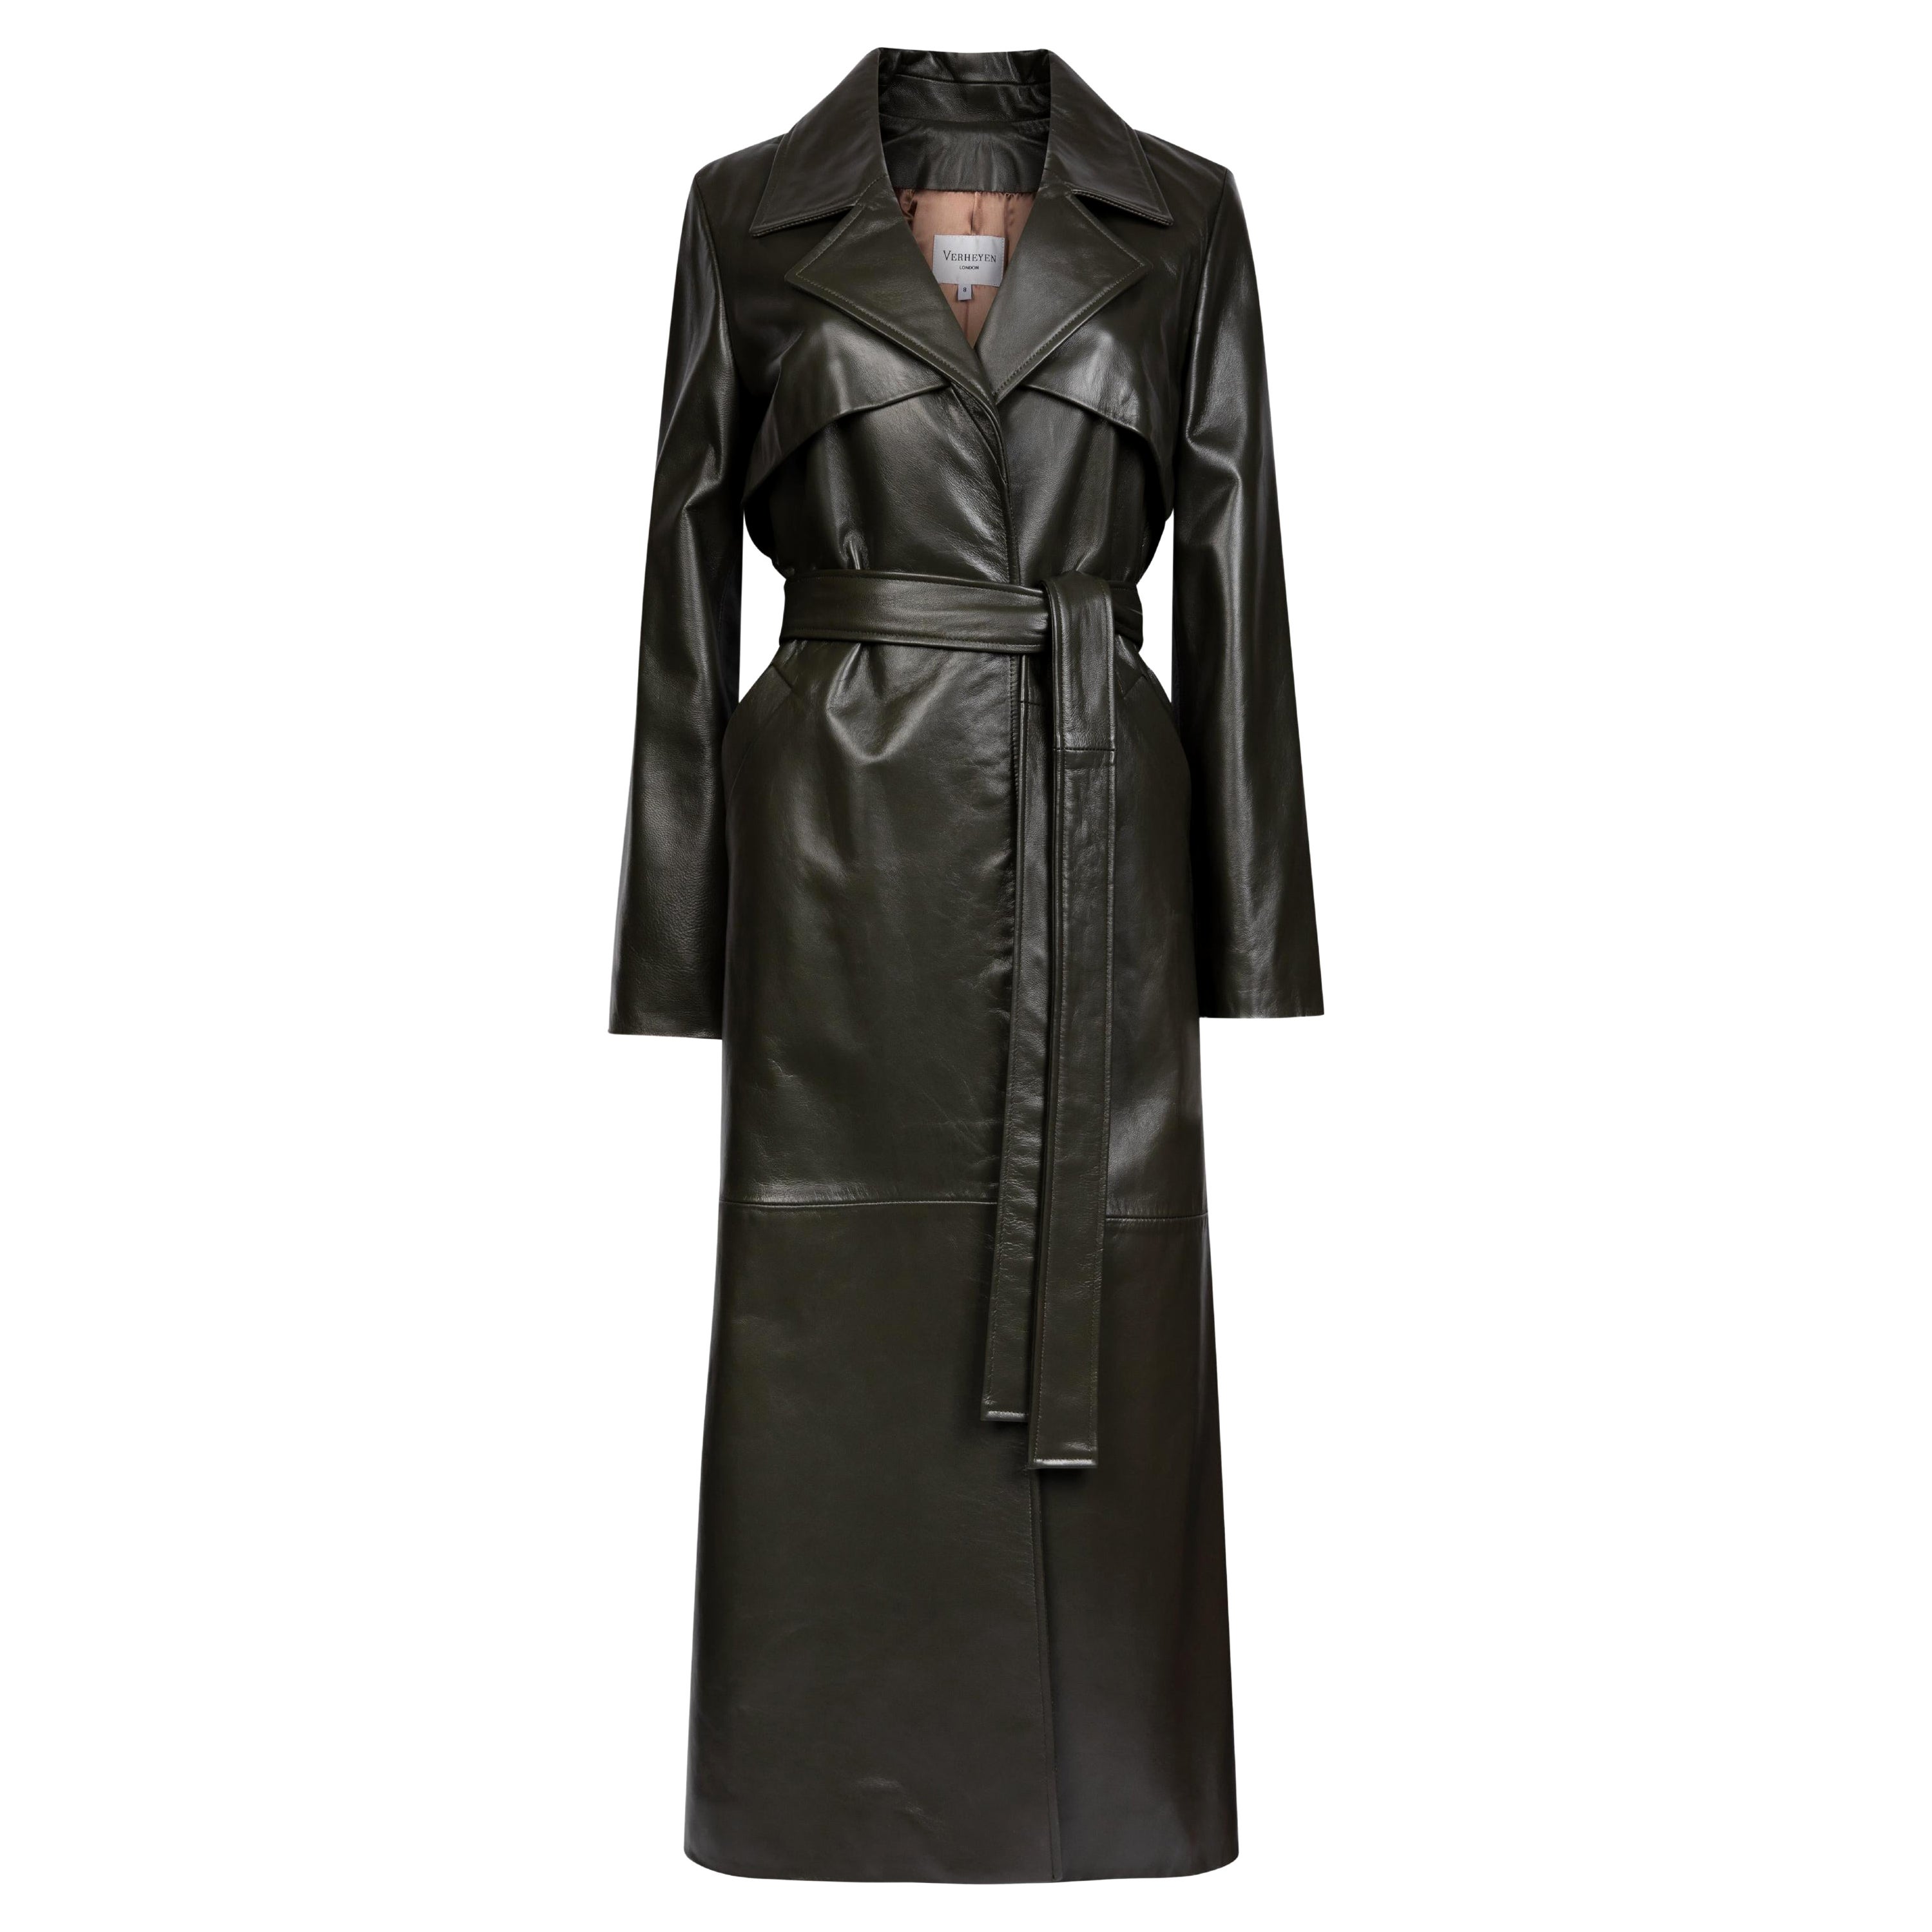 Trench-coat Verheyen London en cuir vert kaki foncé - Taille UK 12 en vente